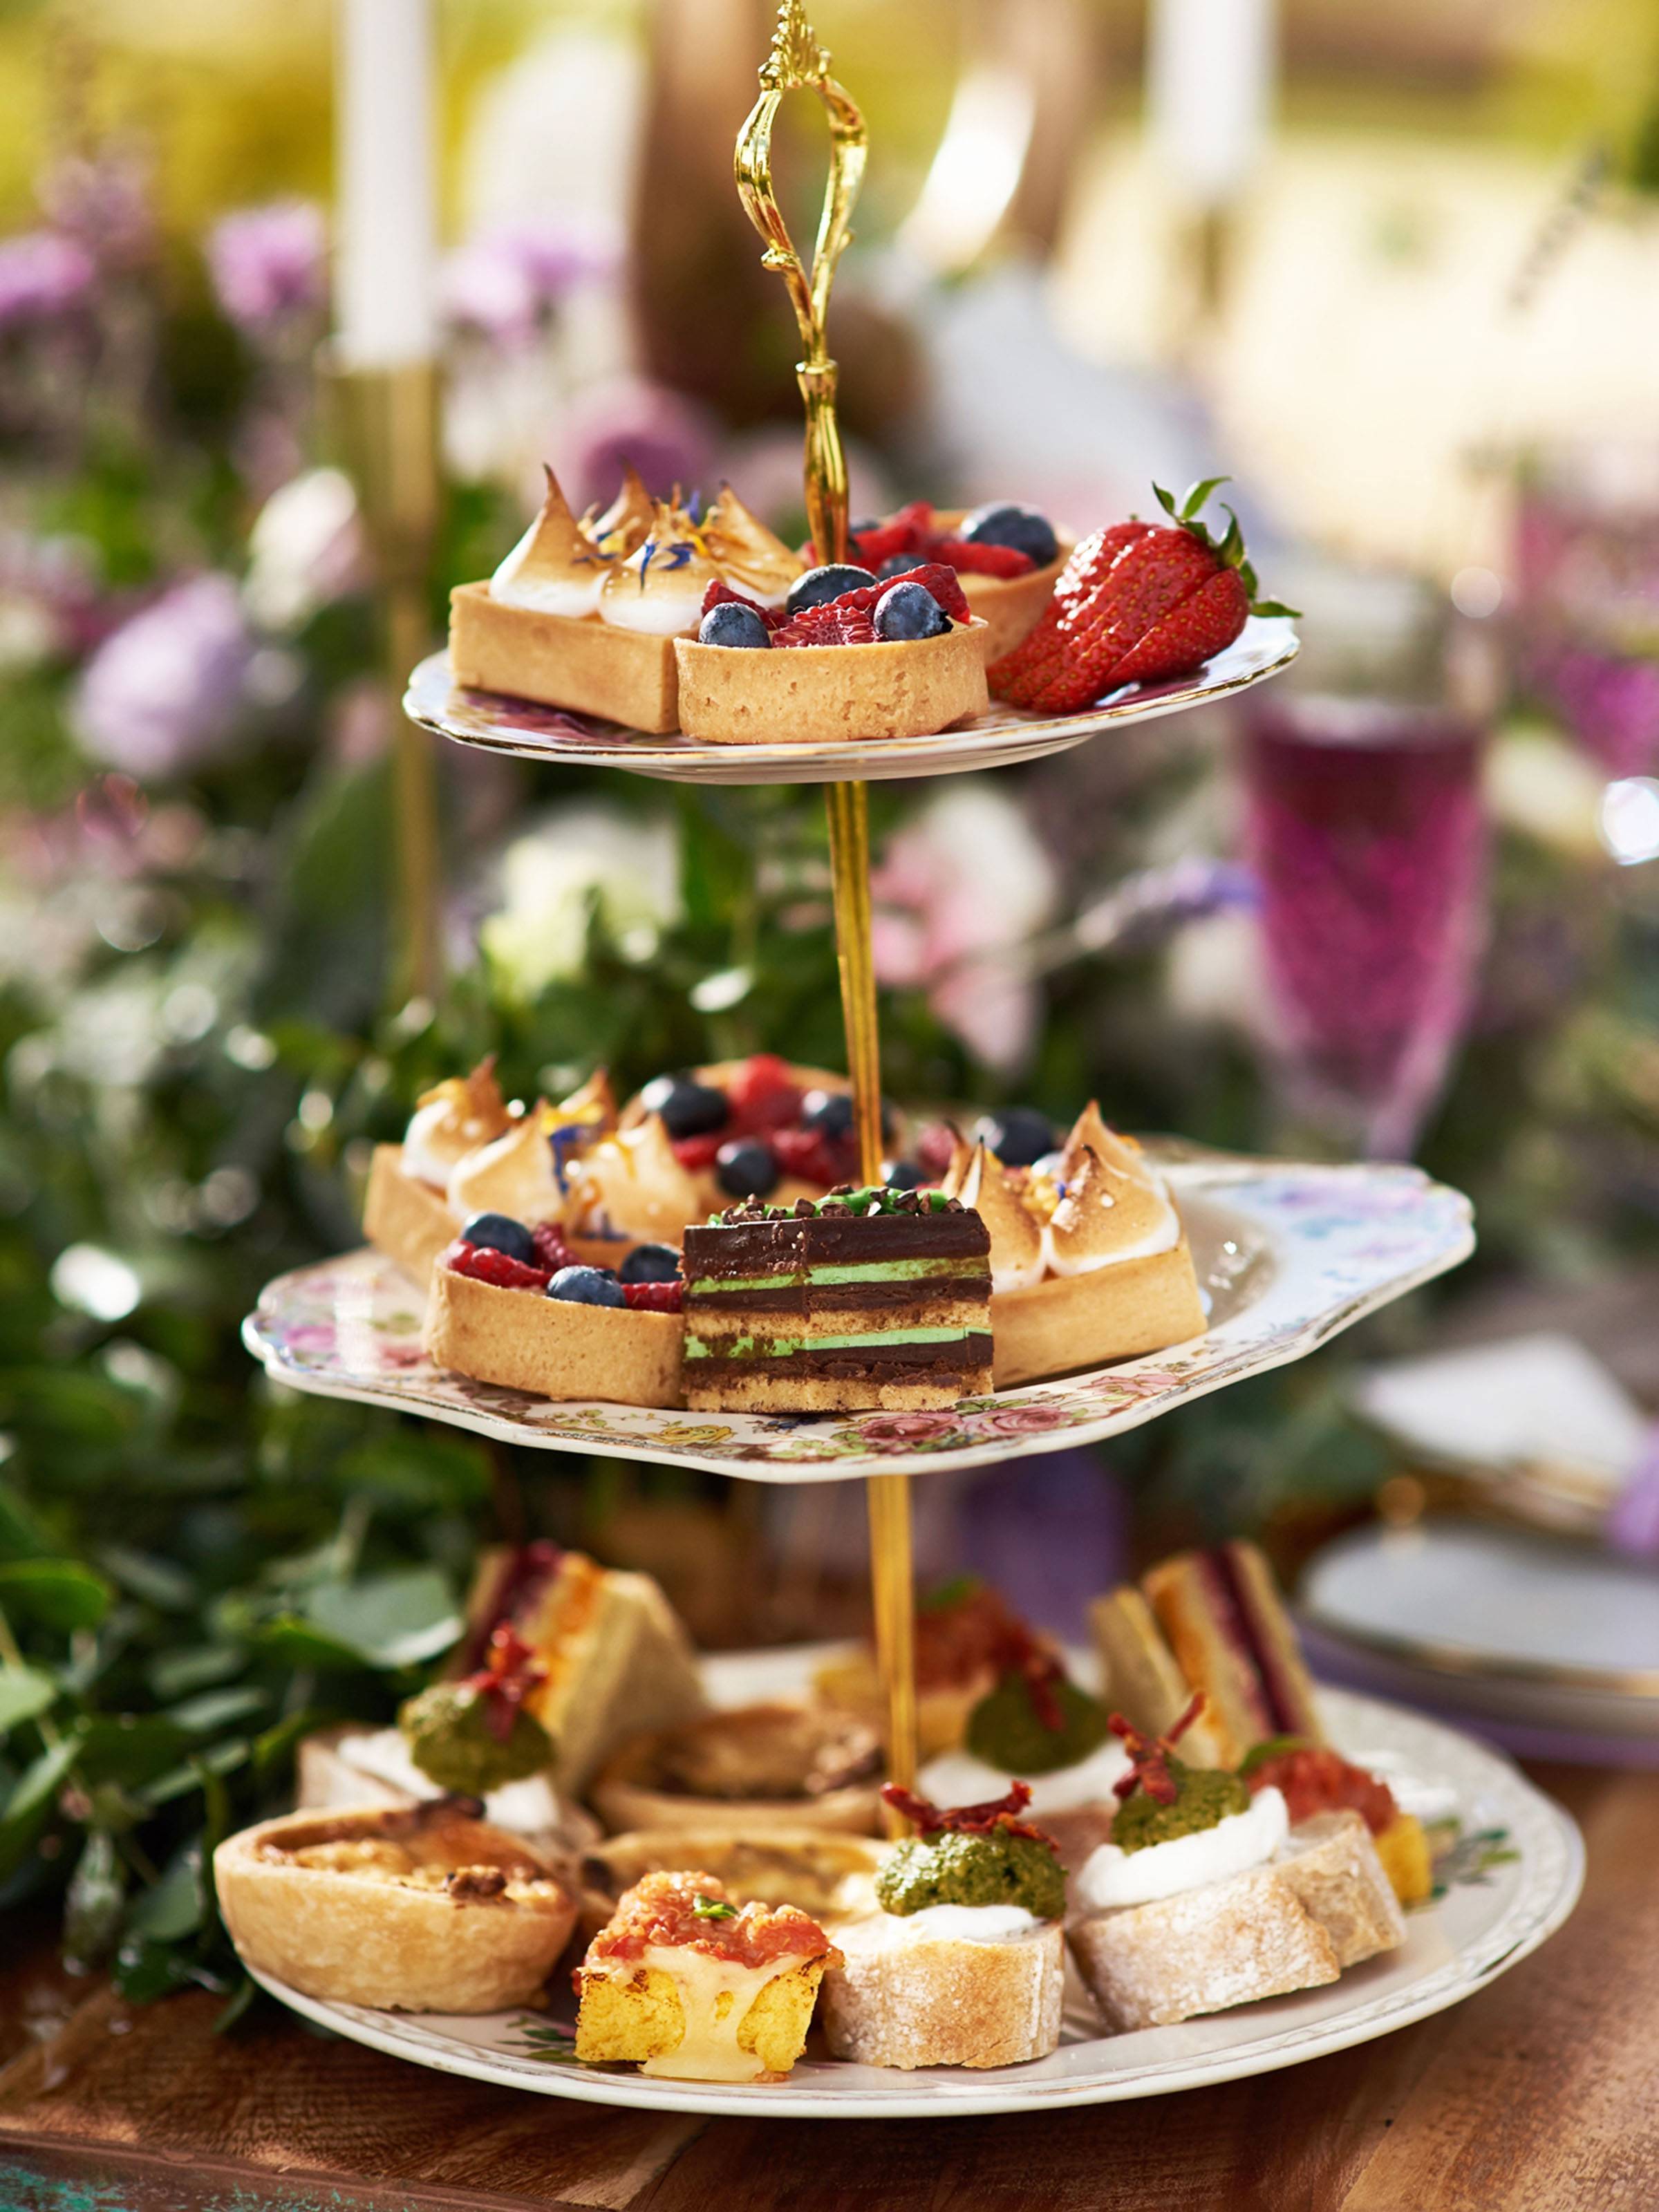 Three tiered dessert tower with fruit, tarts, meringue pastries